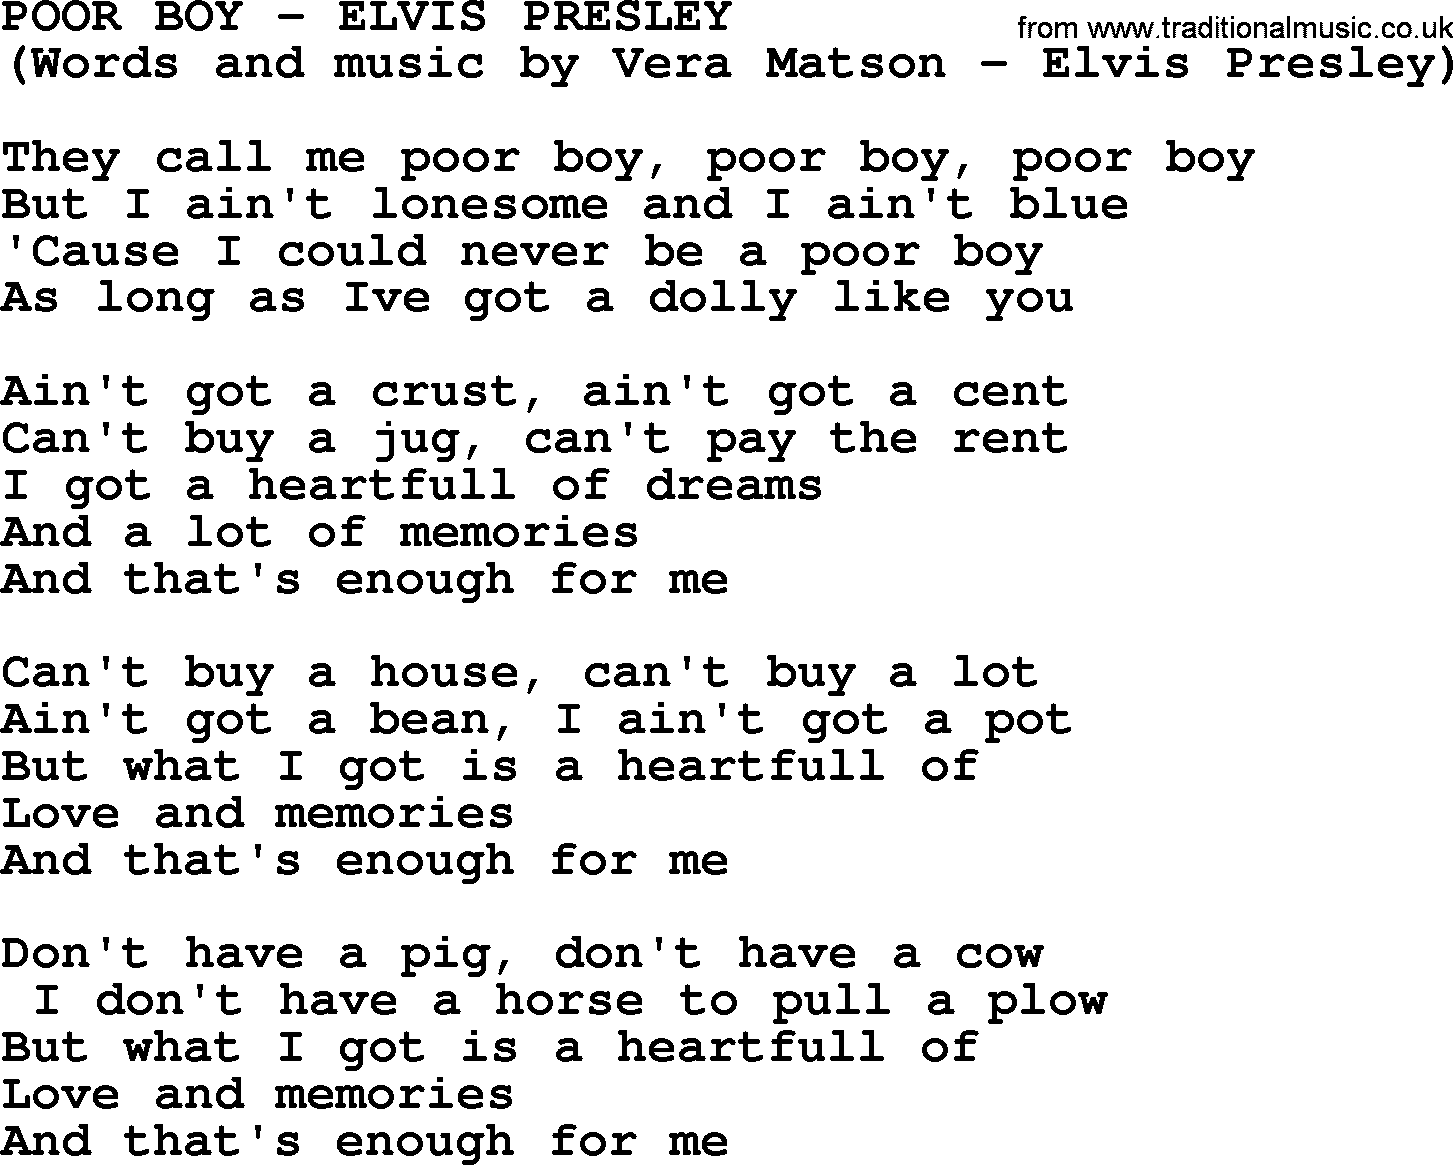 Elvis Presley song: Poor Boy lyrics